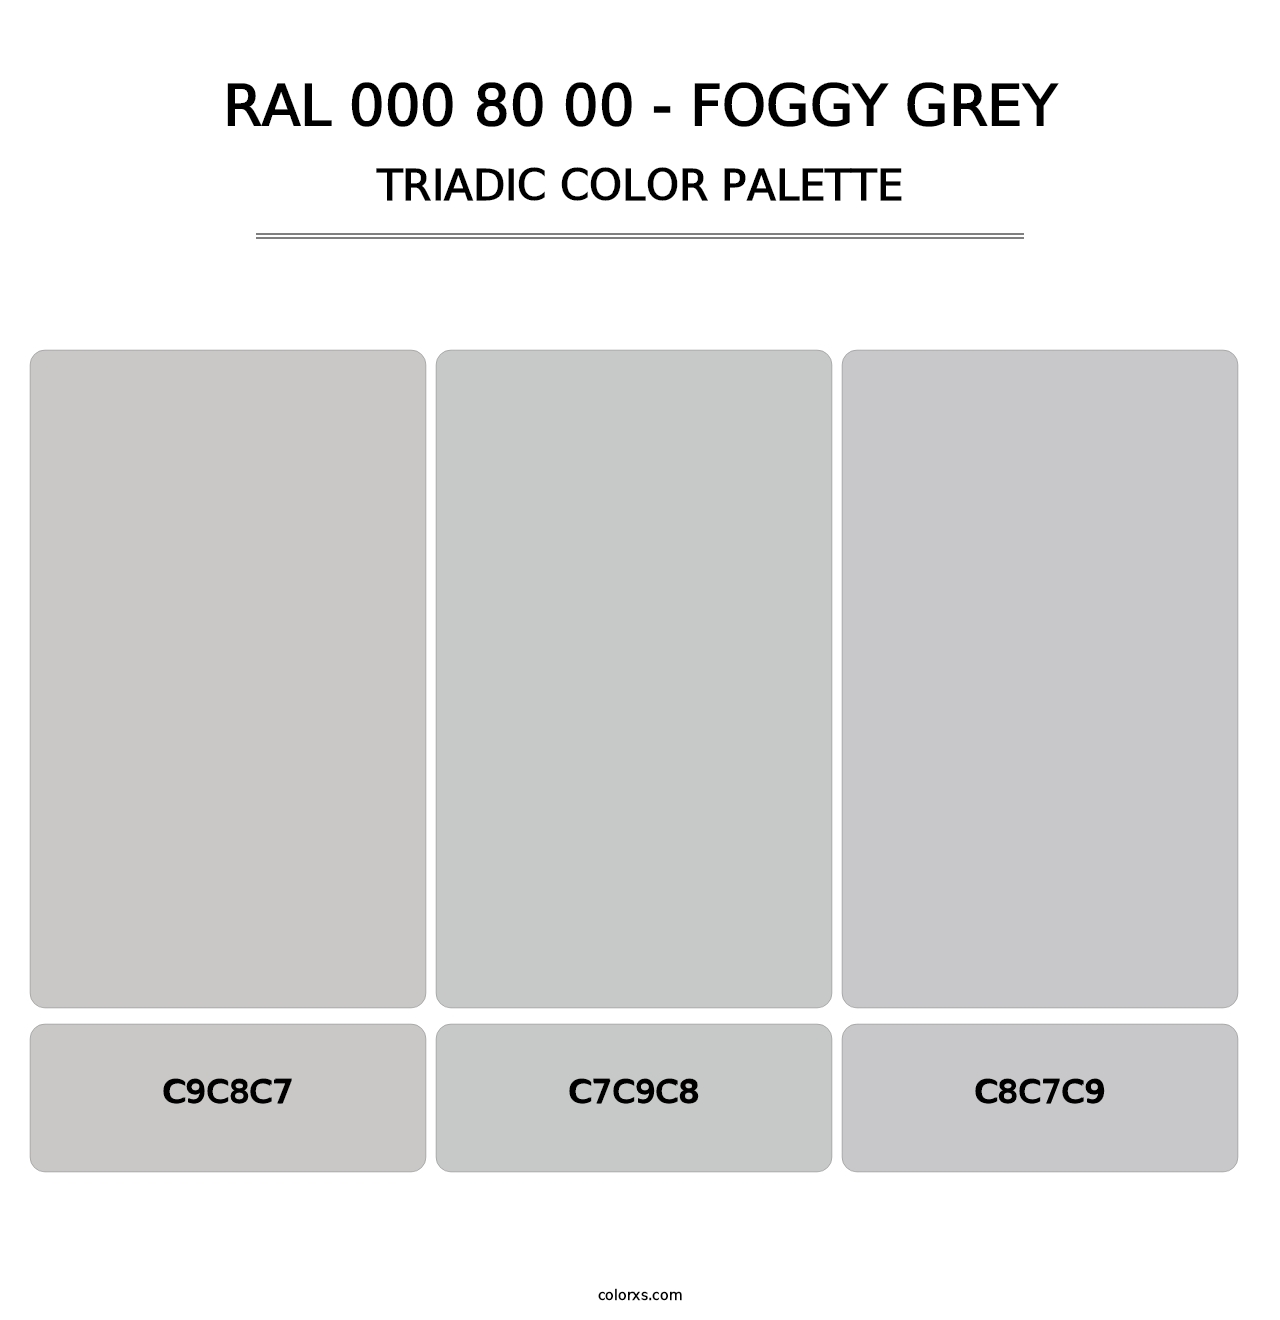 RAL 000 80 00 - Foggy Grey - Triadic Color Palette